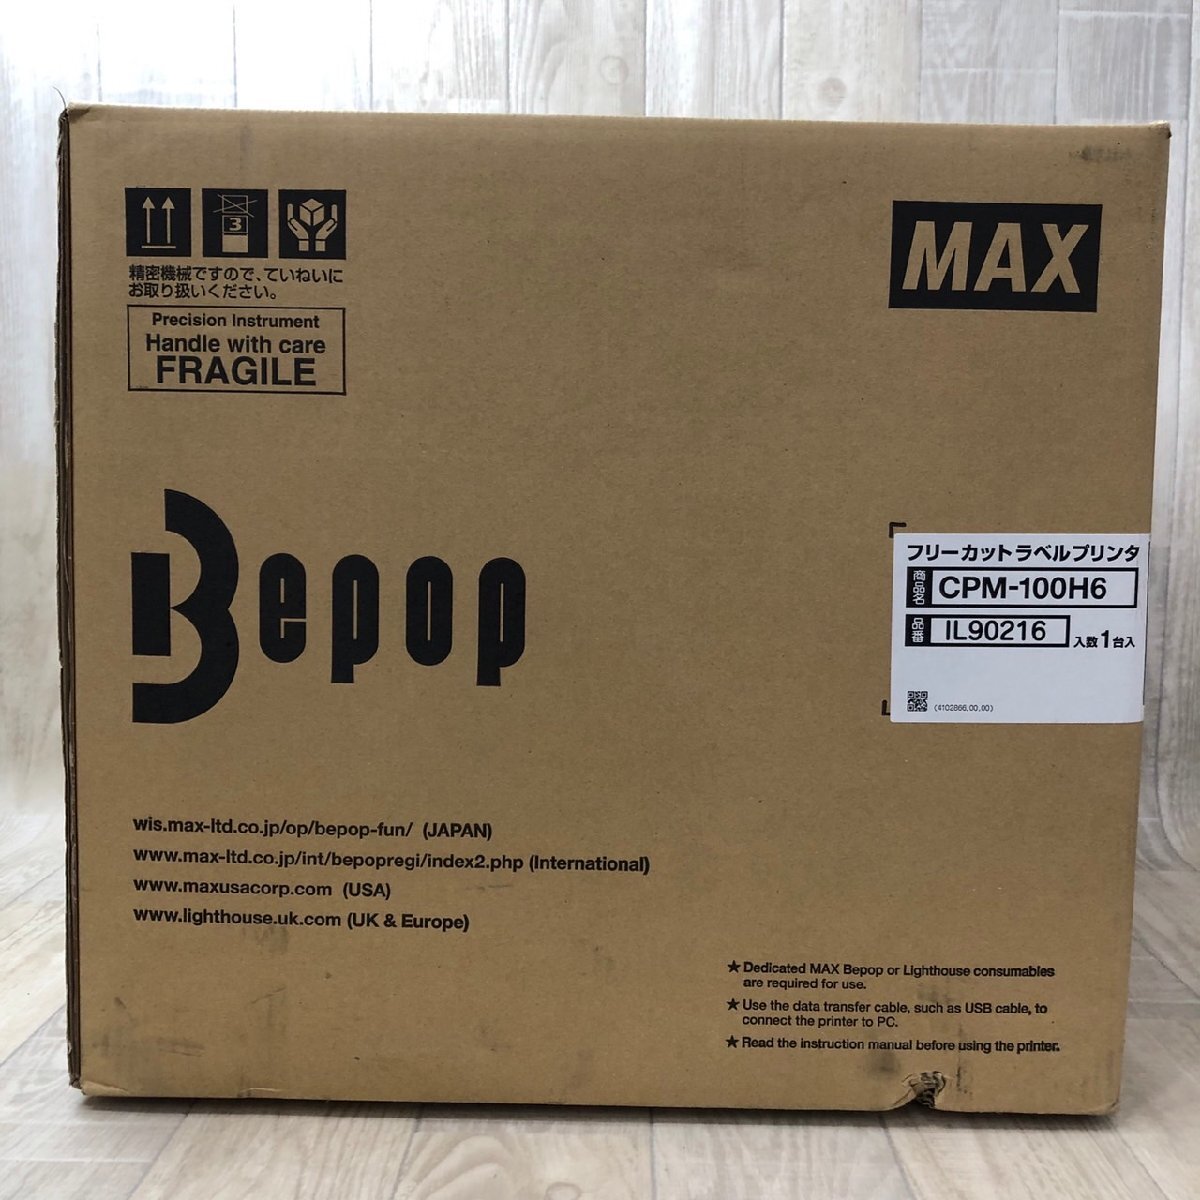  unopened unused MAX Max Bepop Be pop free ka travel printer CPM-100H6 IL90216 photograph illustration printing storage goods box attaching 